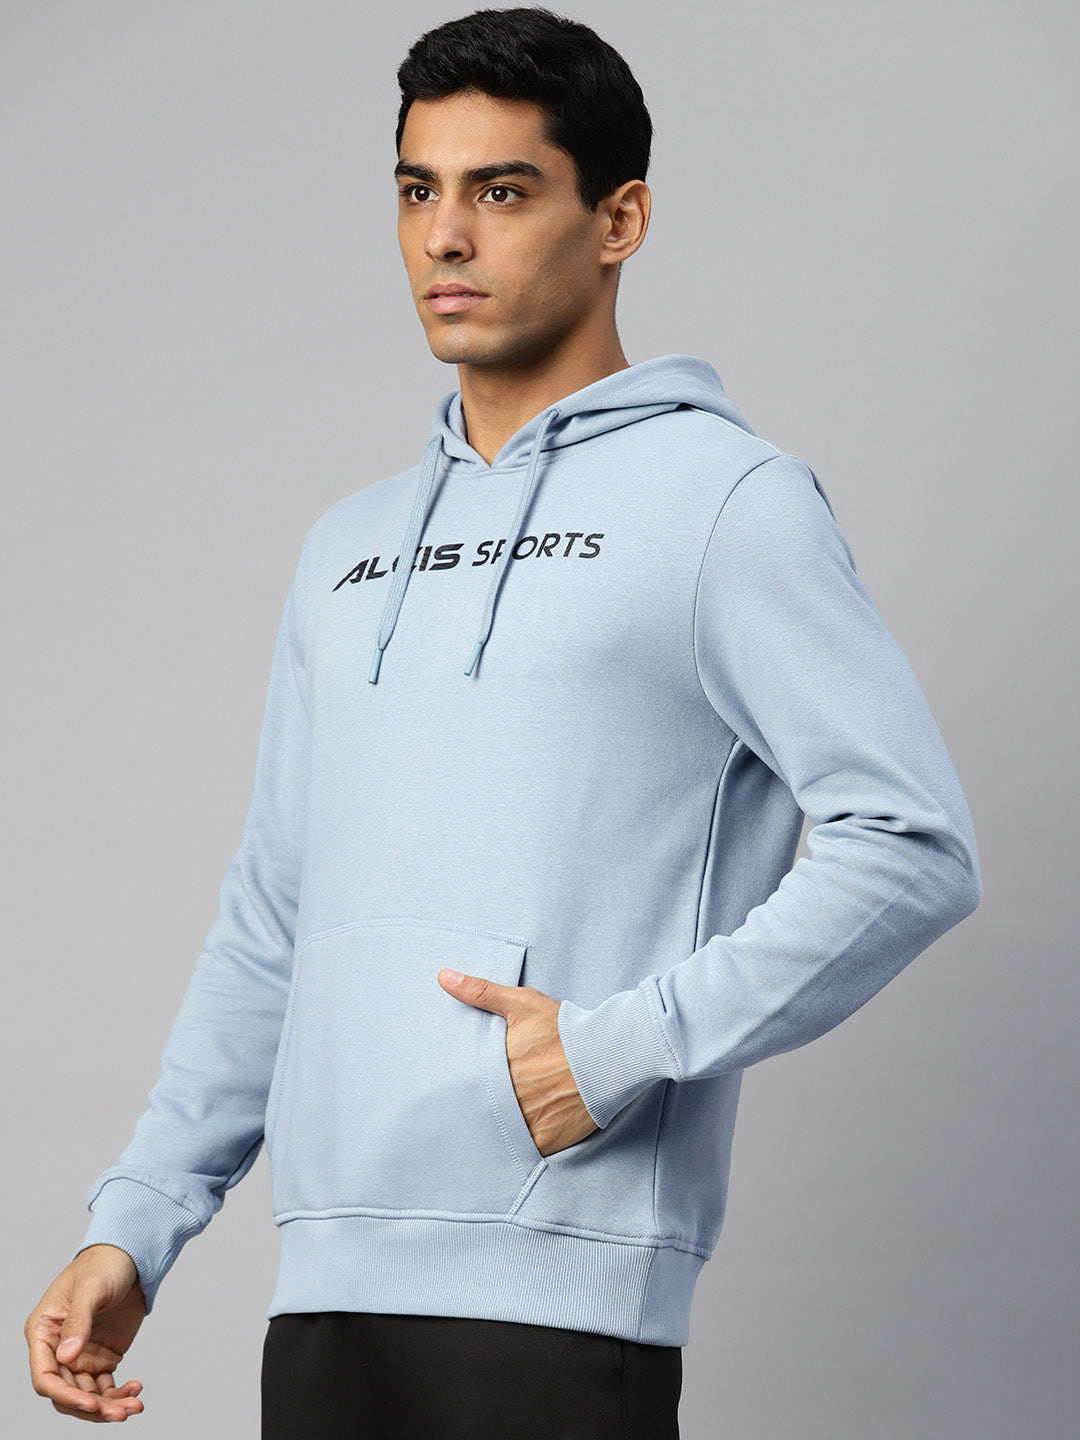 Alcis Men Typography Printed Hooded Sweatshirt